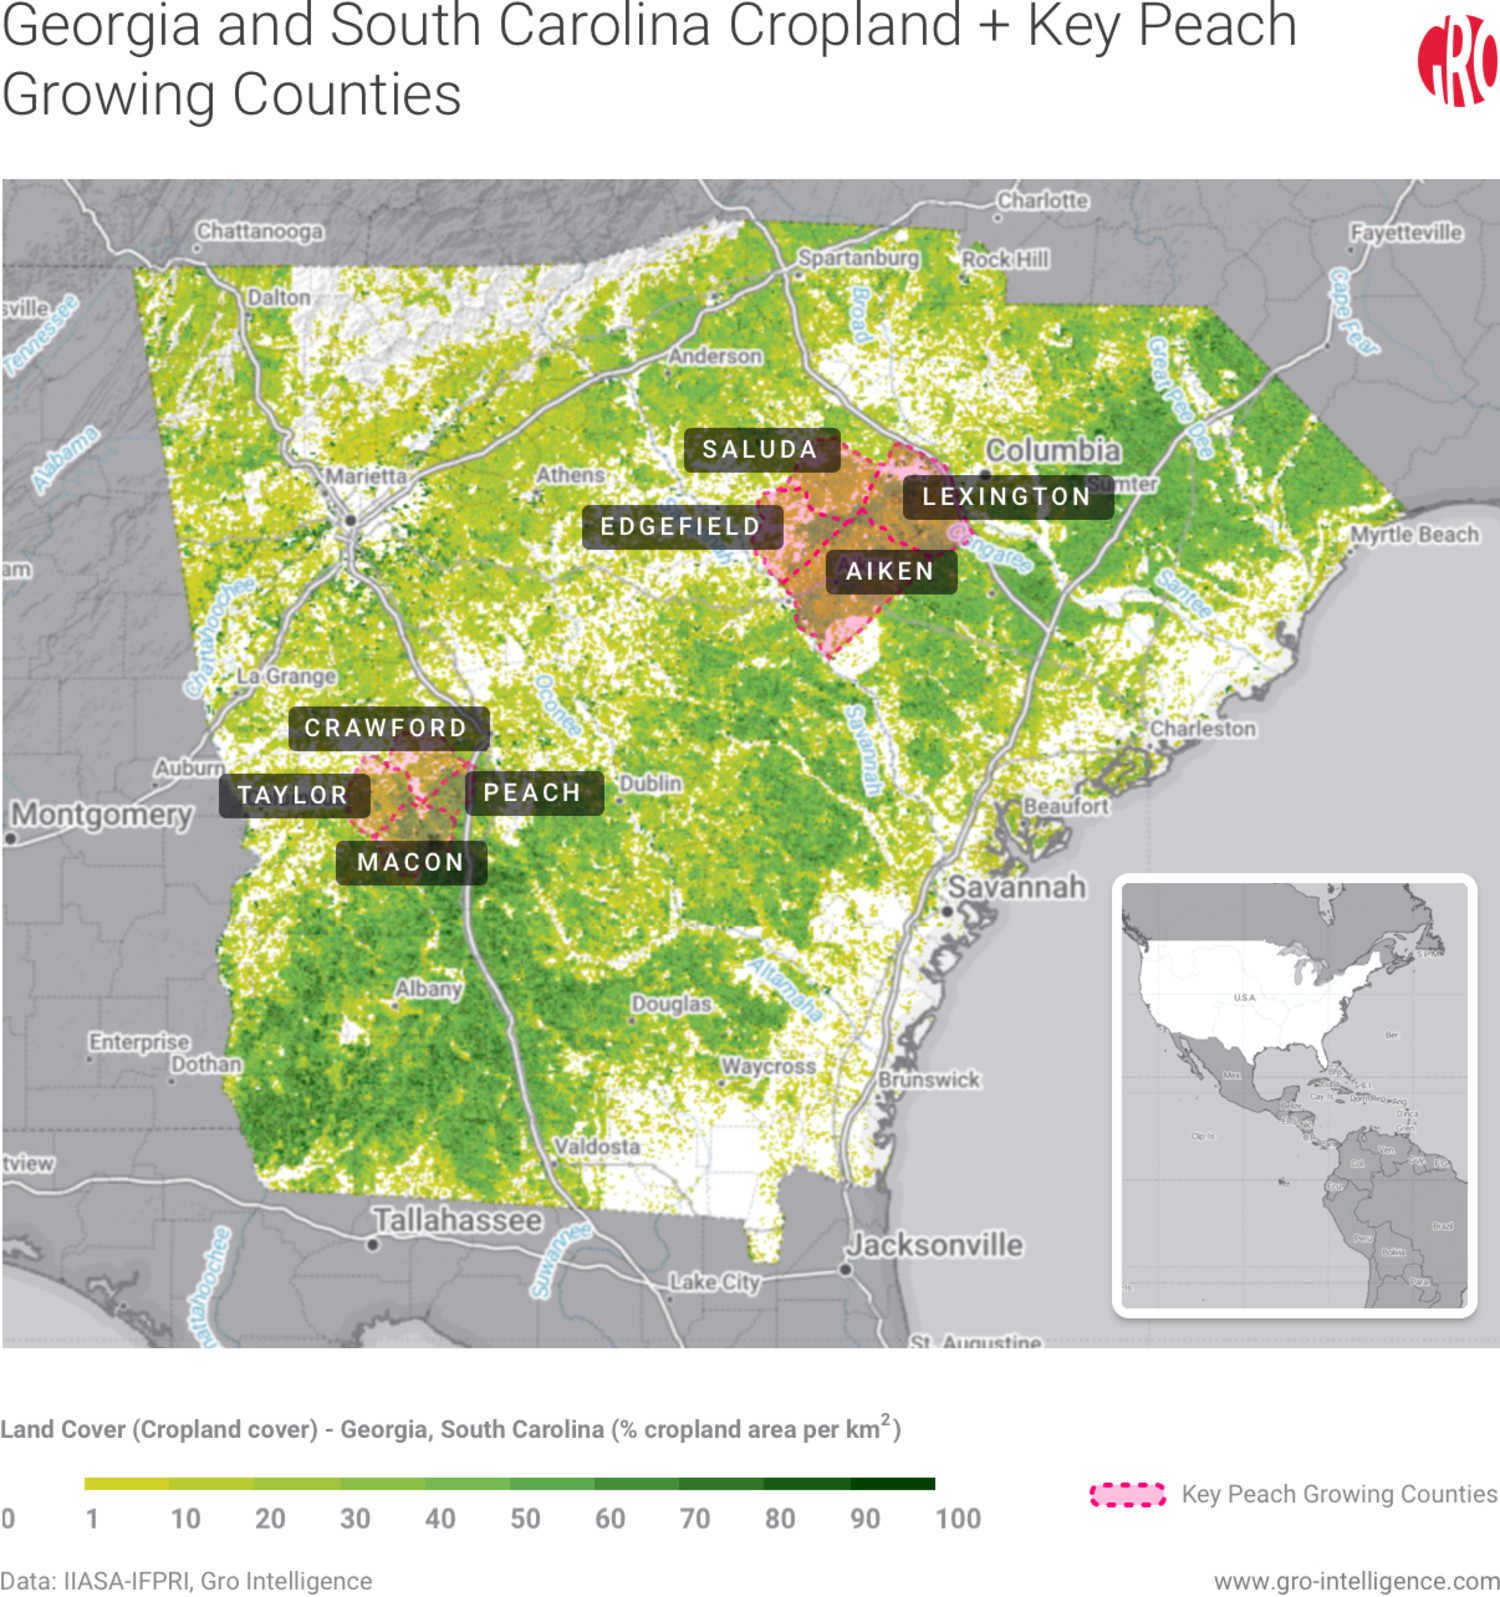 Georgia and South Carolina Cropland + Key Peach Growing Counties